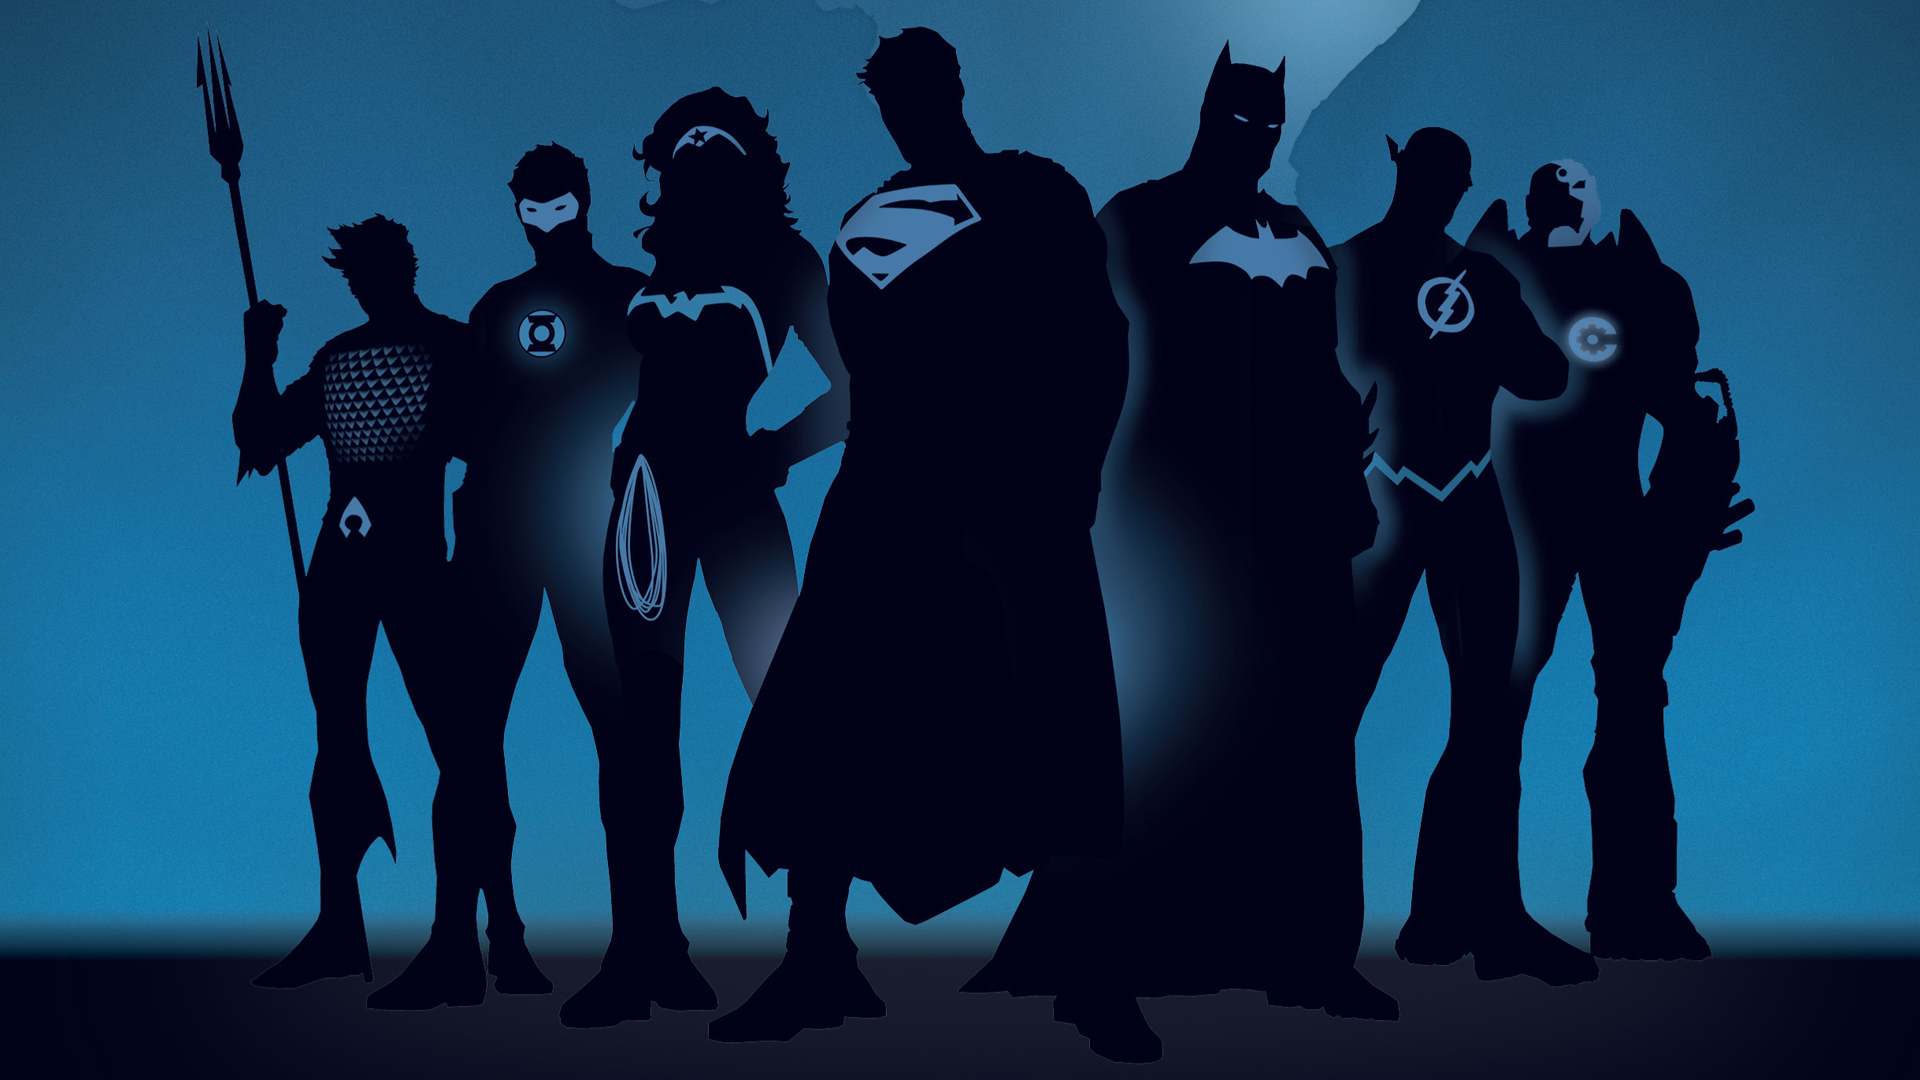 batman, bruce wayne, comics, diana prince, justice league, superman, dc comics, wonder woman, aquaman, barry allen, cyborg (dc comics), flash, green lantern, the dark knight Full HD